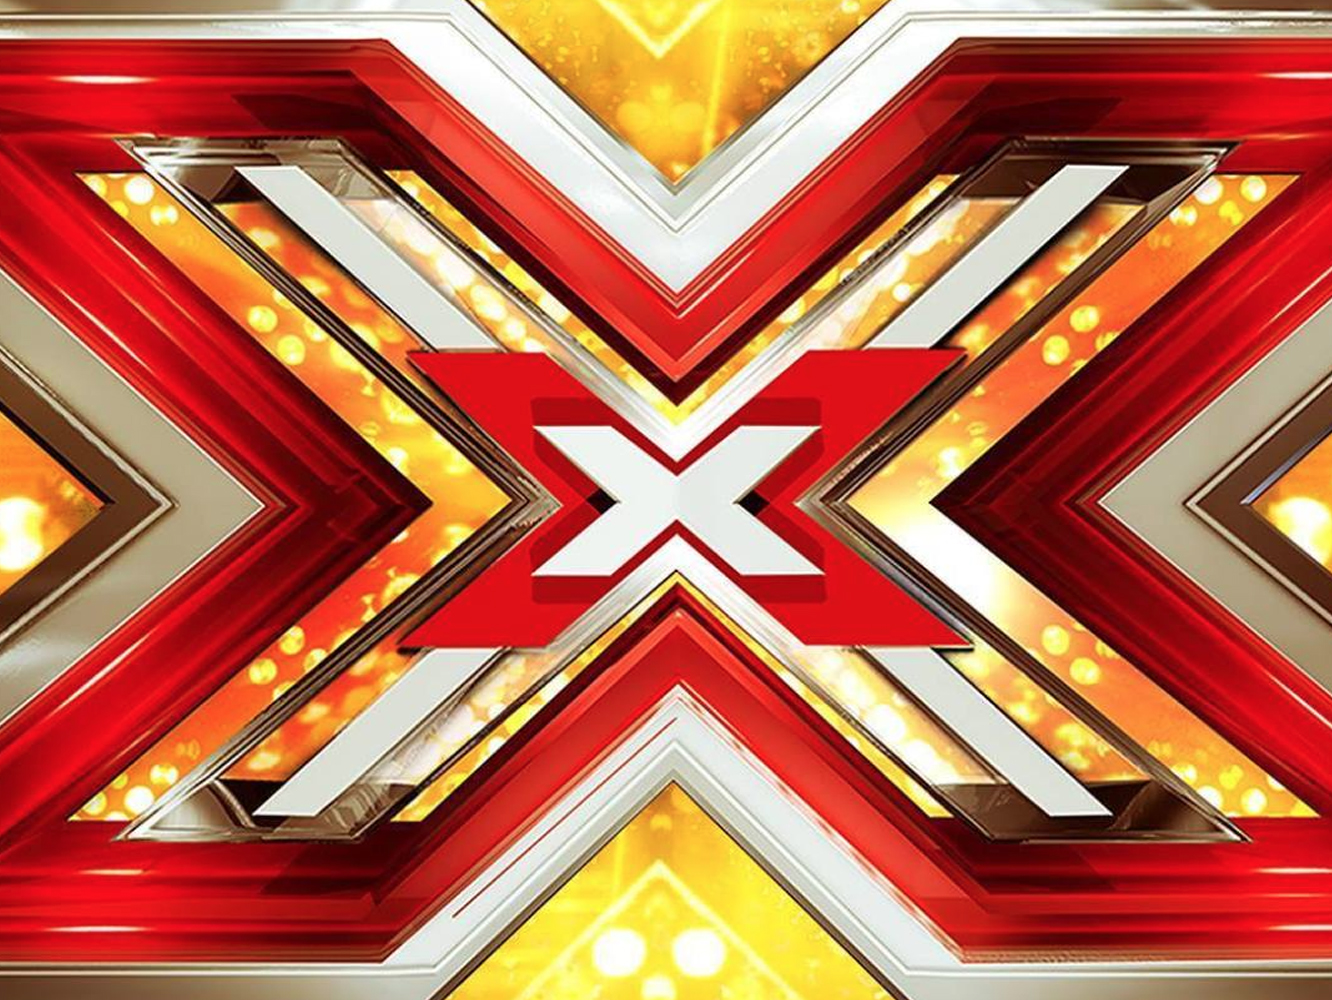  Vuelve ‘The X Factor’ a España: los motivos para no emocionarse